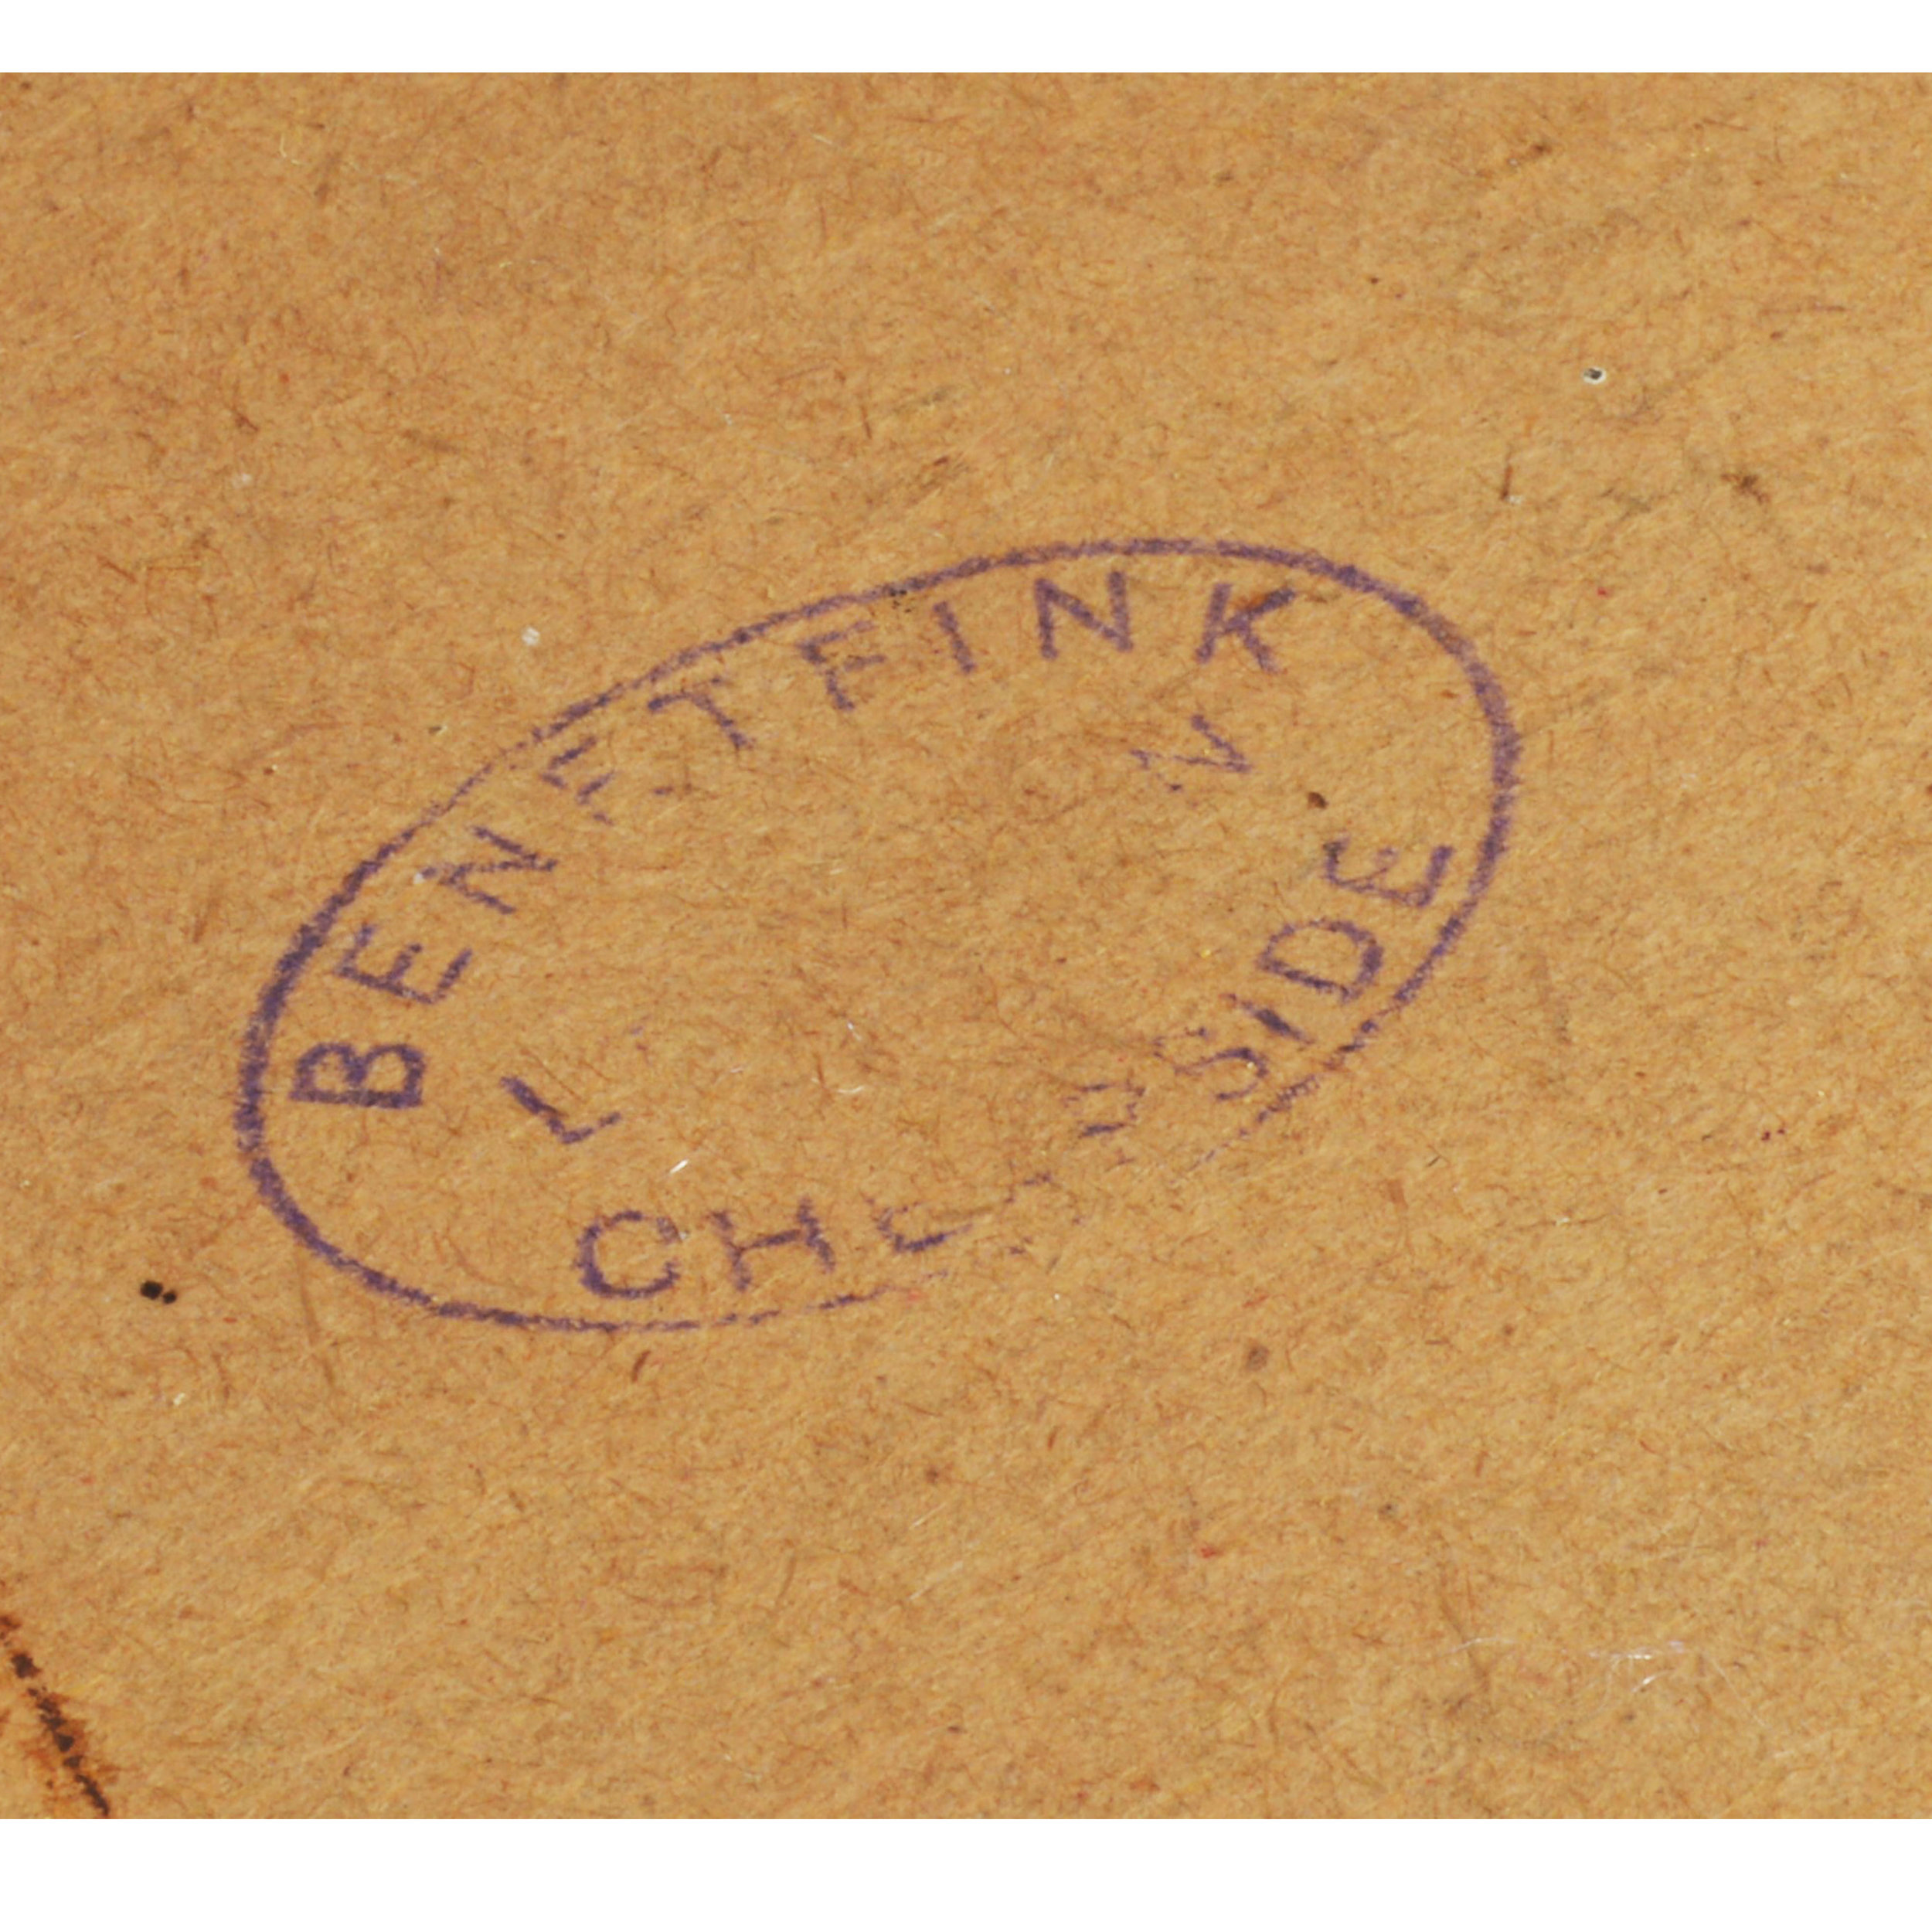 Benetfink, Cheapside, London, retailers stamp